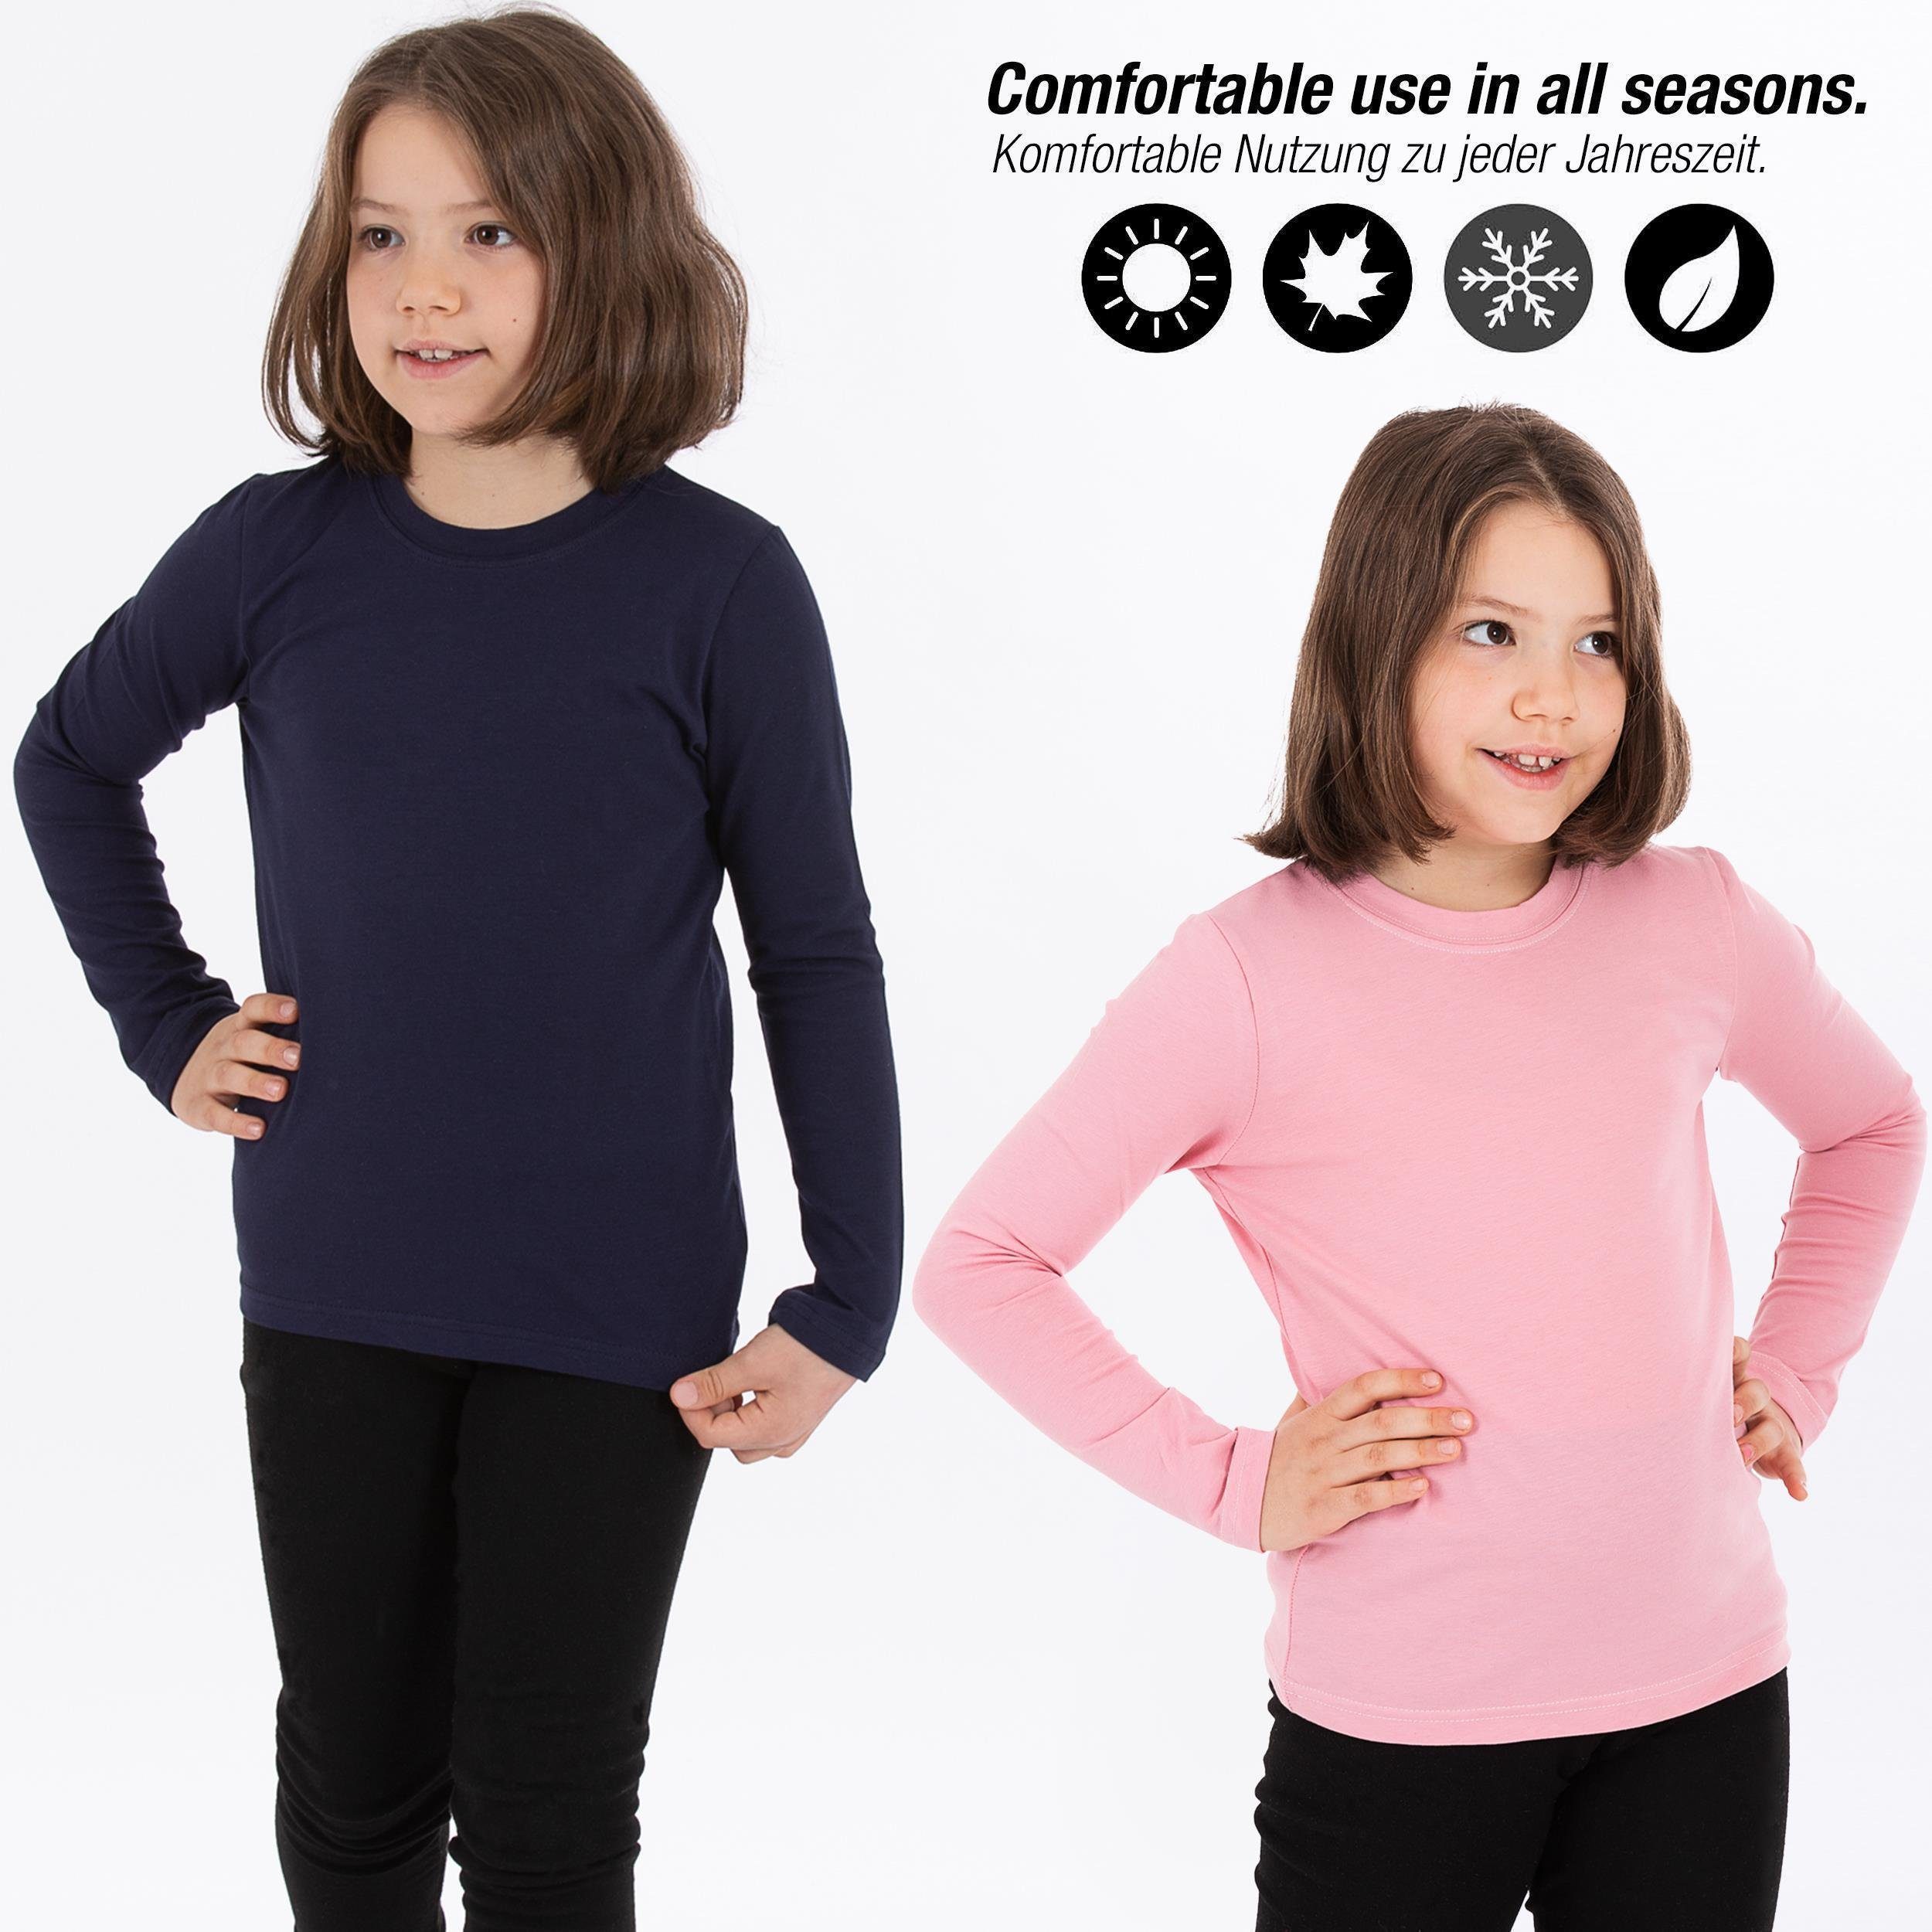 Kinder Unterhemd LOREZA (Set, Pack 3er Body 6 Variante 3-St) Shirt Unterhemden Mädchen Langarmshirts